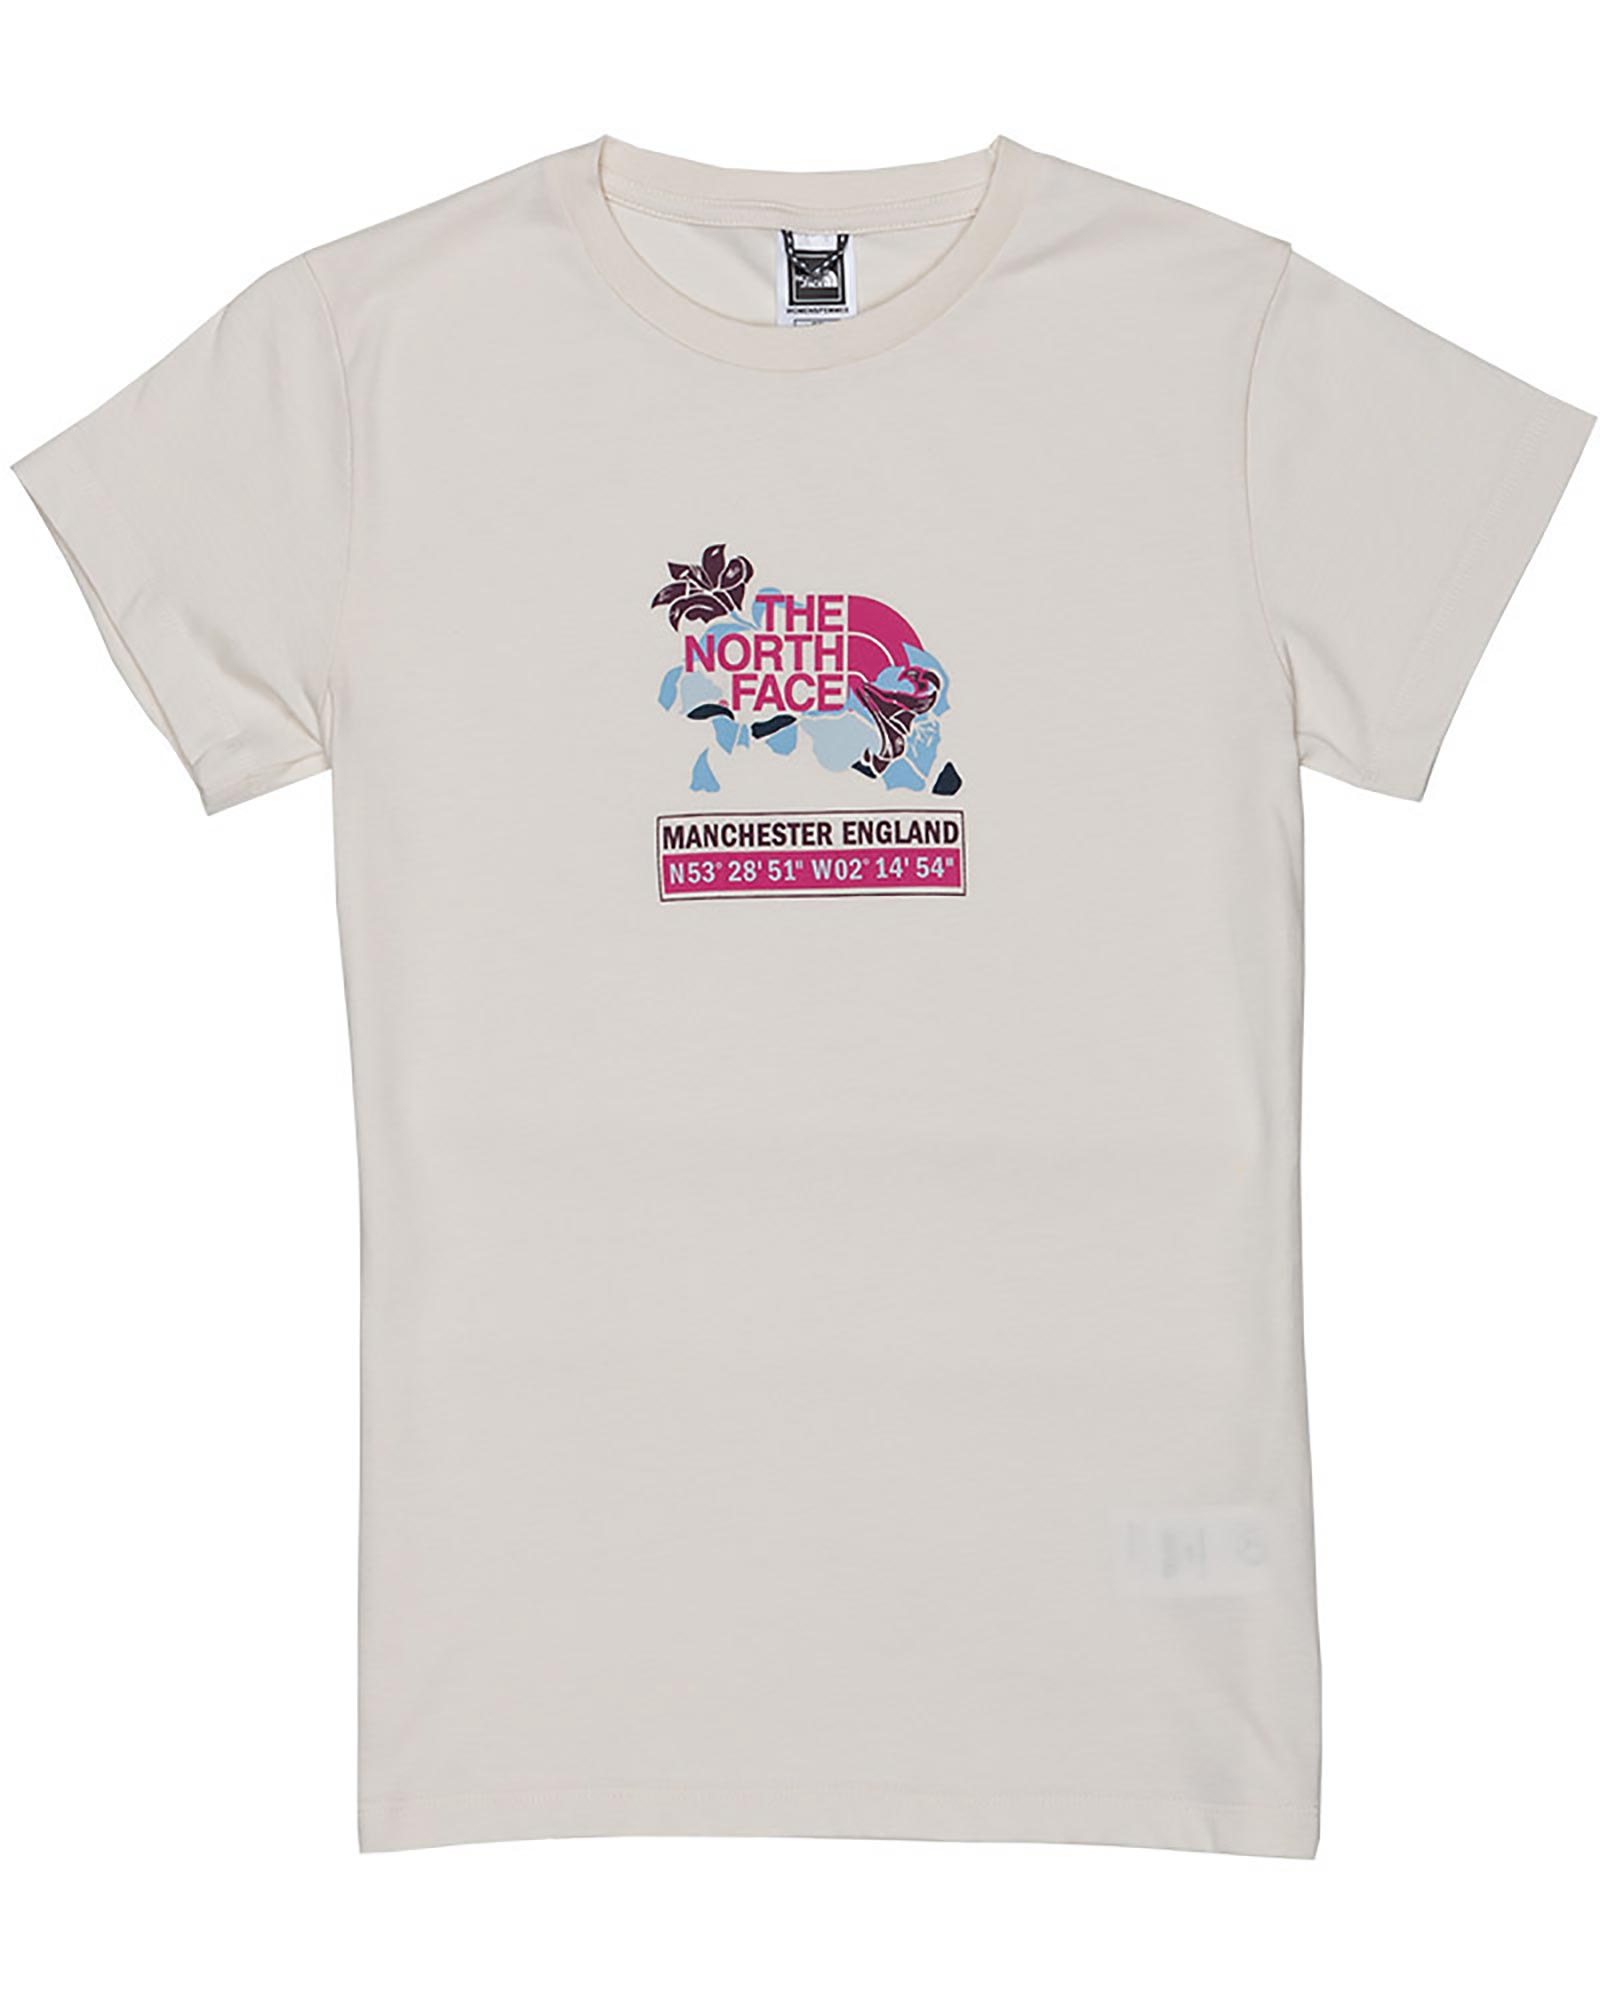 The North Face Manchester GPS Logo Women’s T Shirt - Cream M